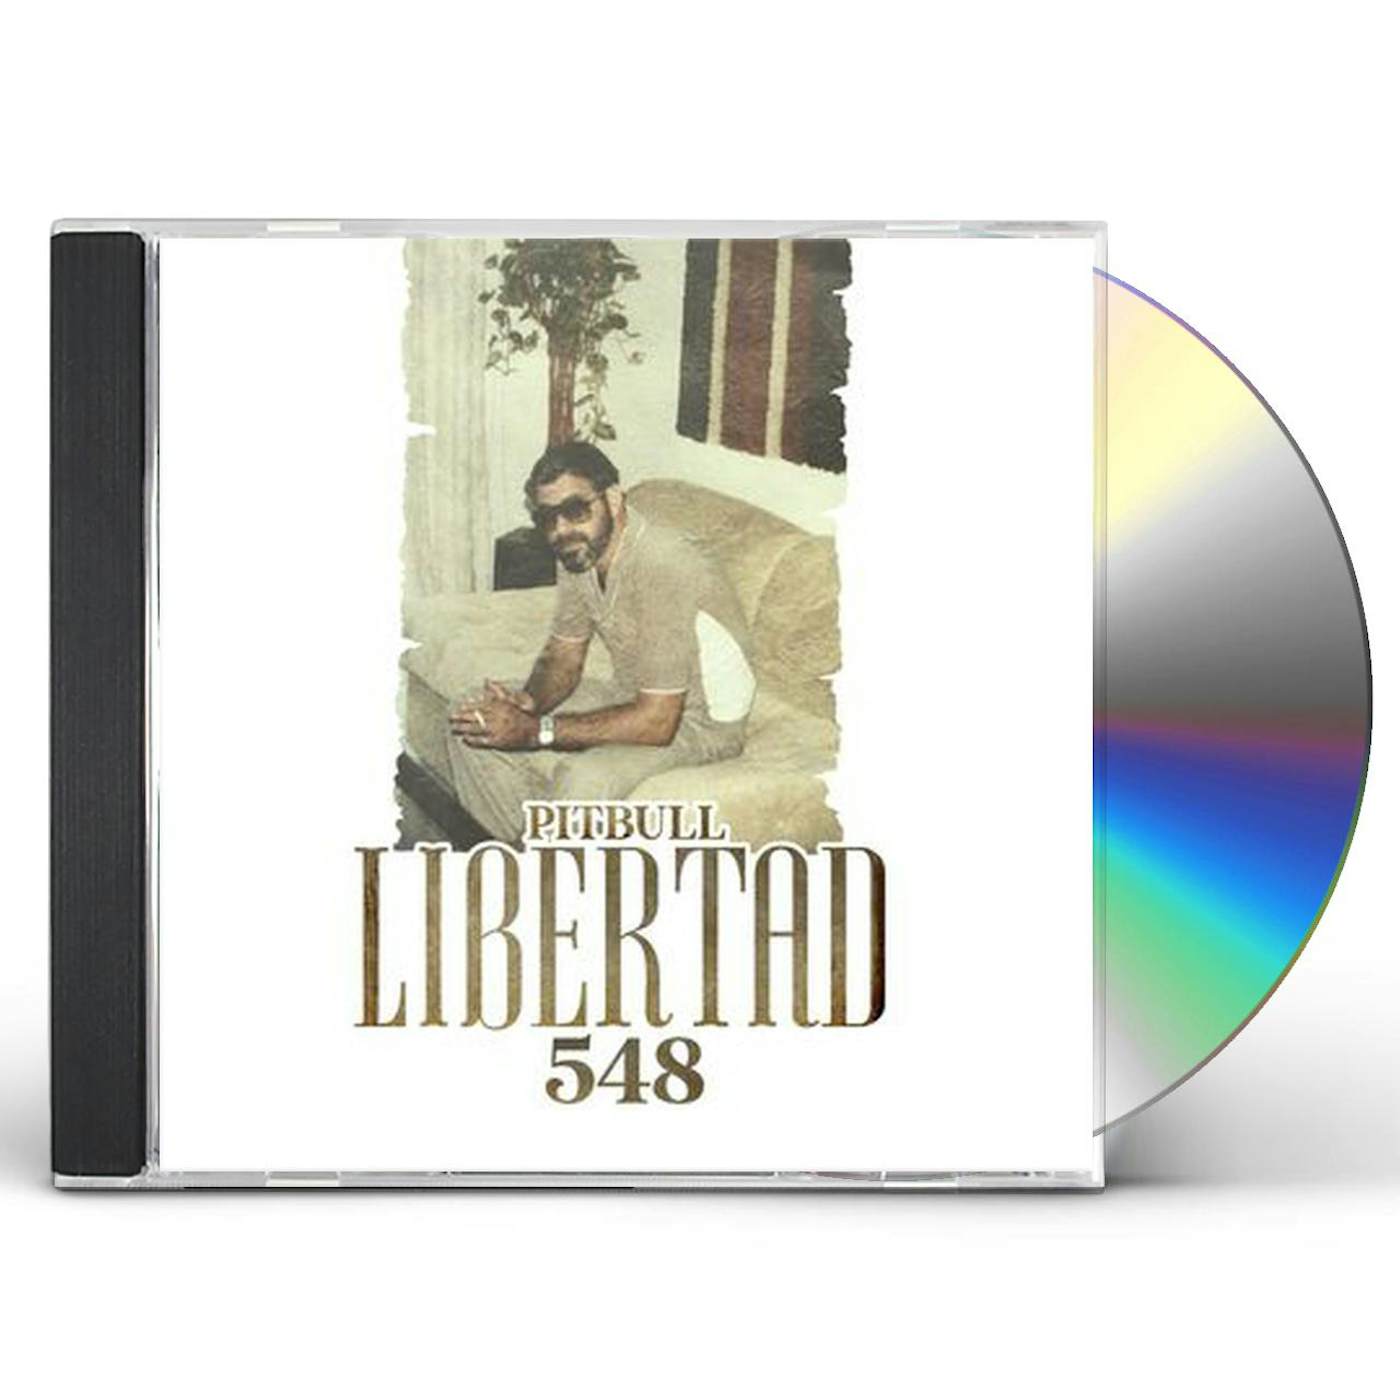 Pitbull LIBERTAD 548 CD